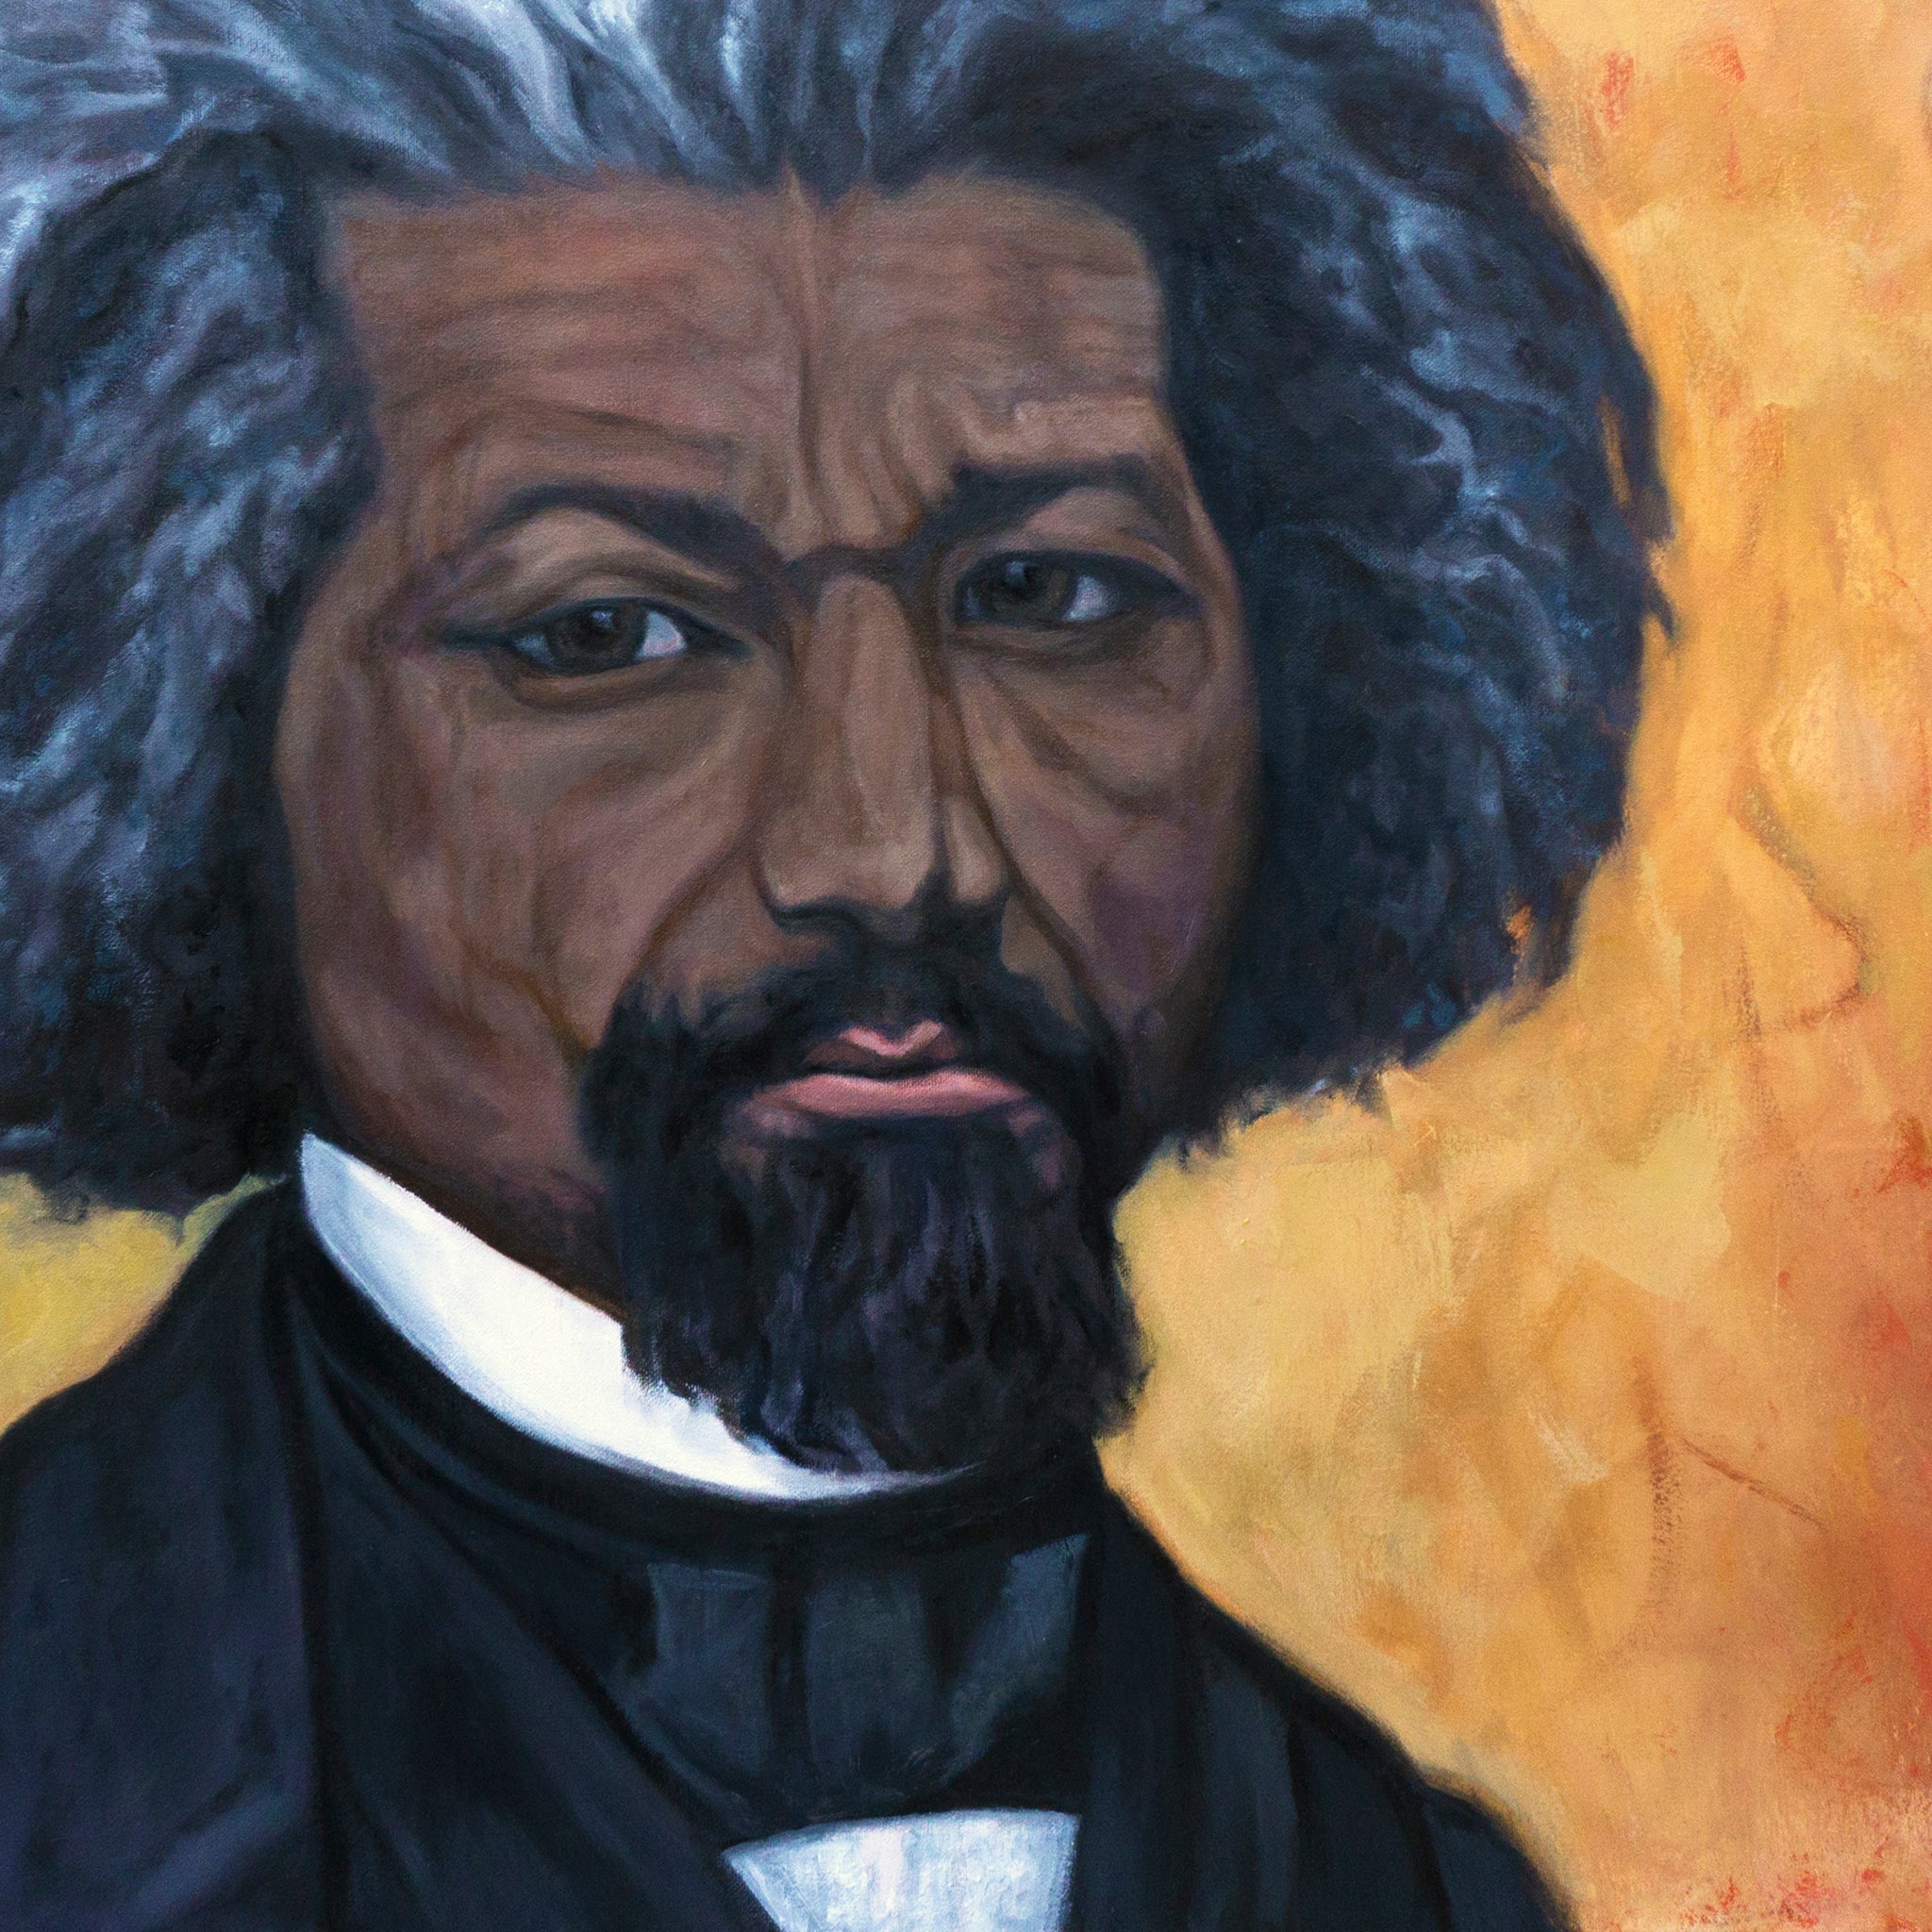 Happy Birthday Frederick Douglass